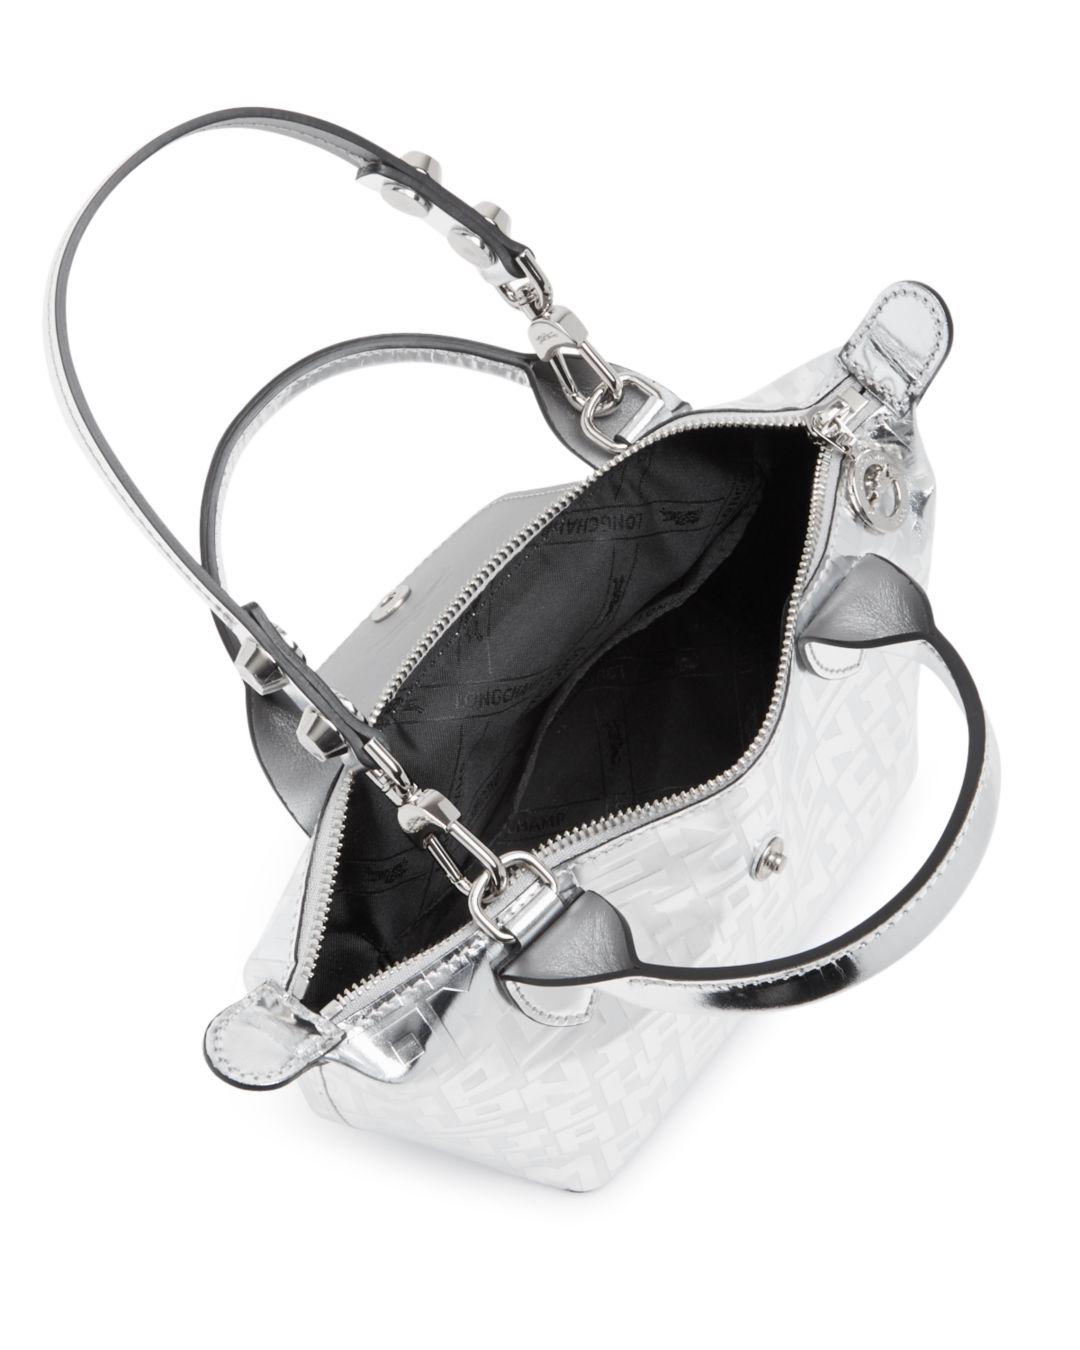 Longchamp Le Pliage Cuir Mini Leather Handbag in Silver (Metallic) - Lyst